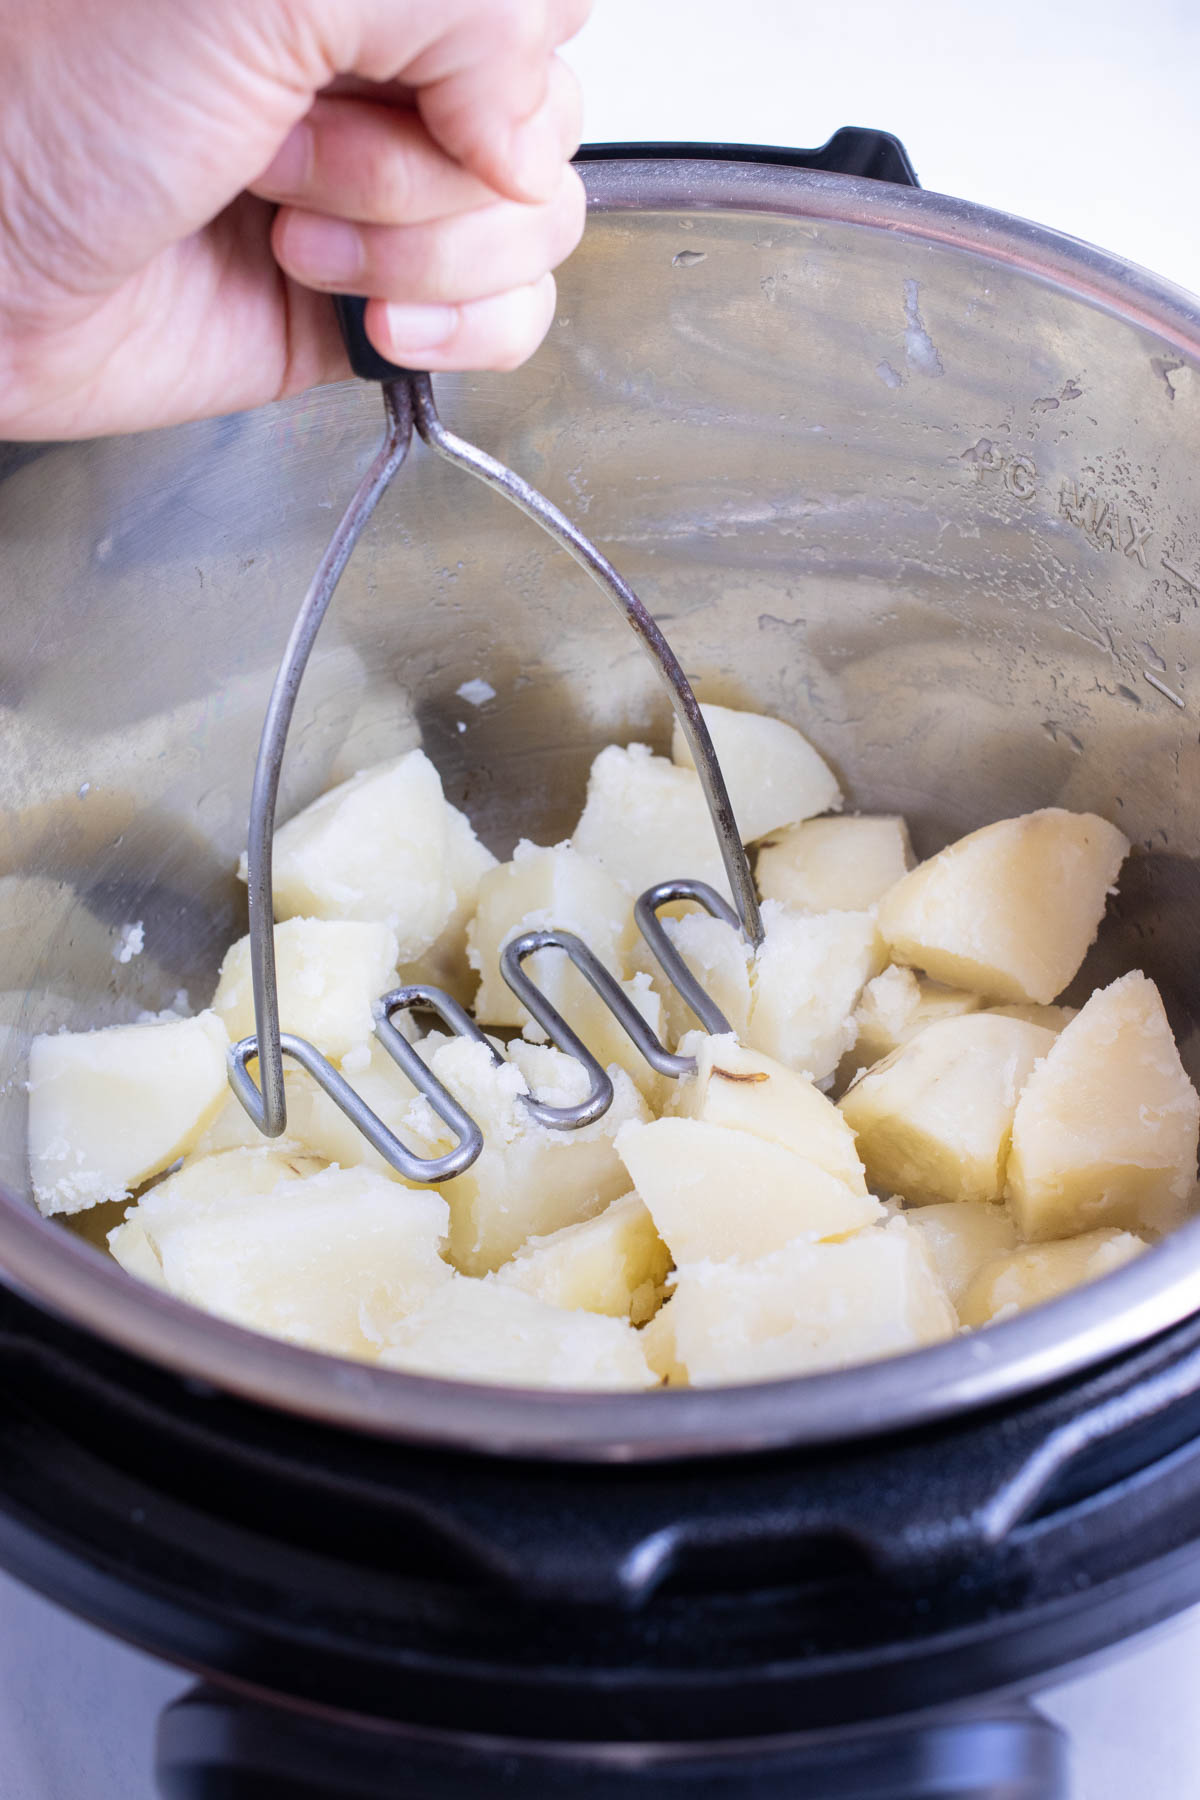 Potatoes are mashed into big chunks.